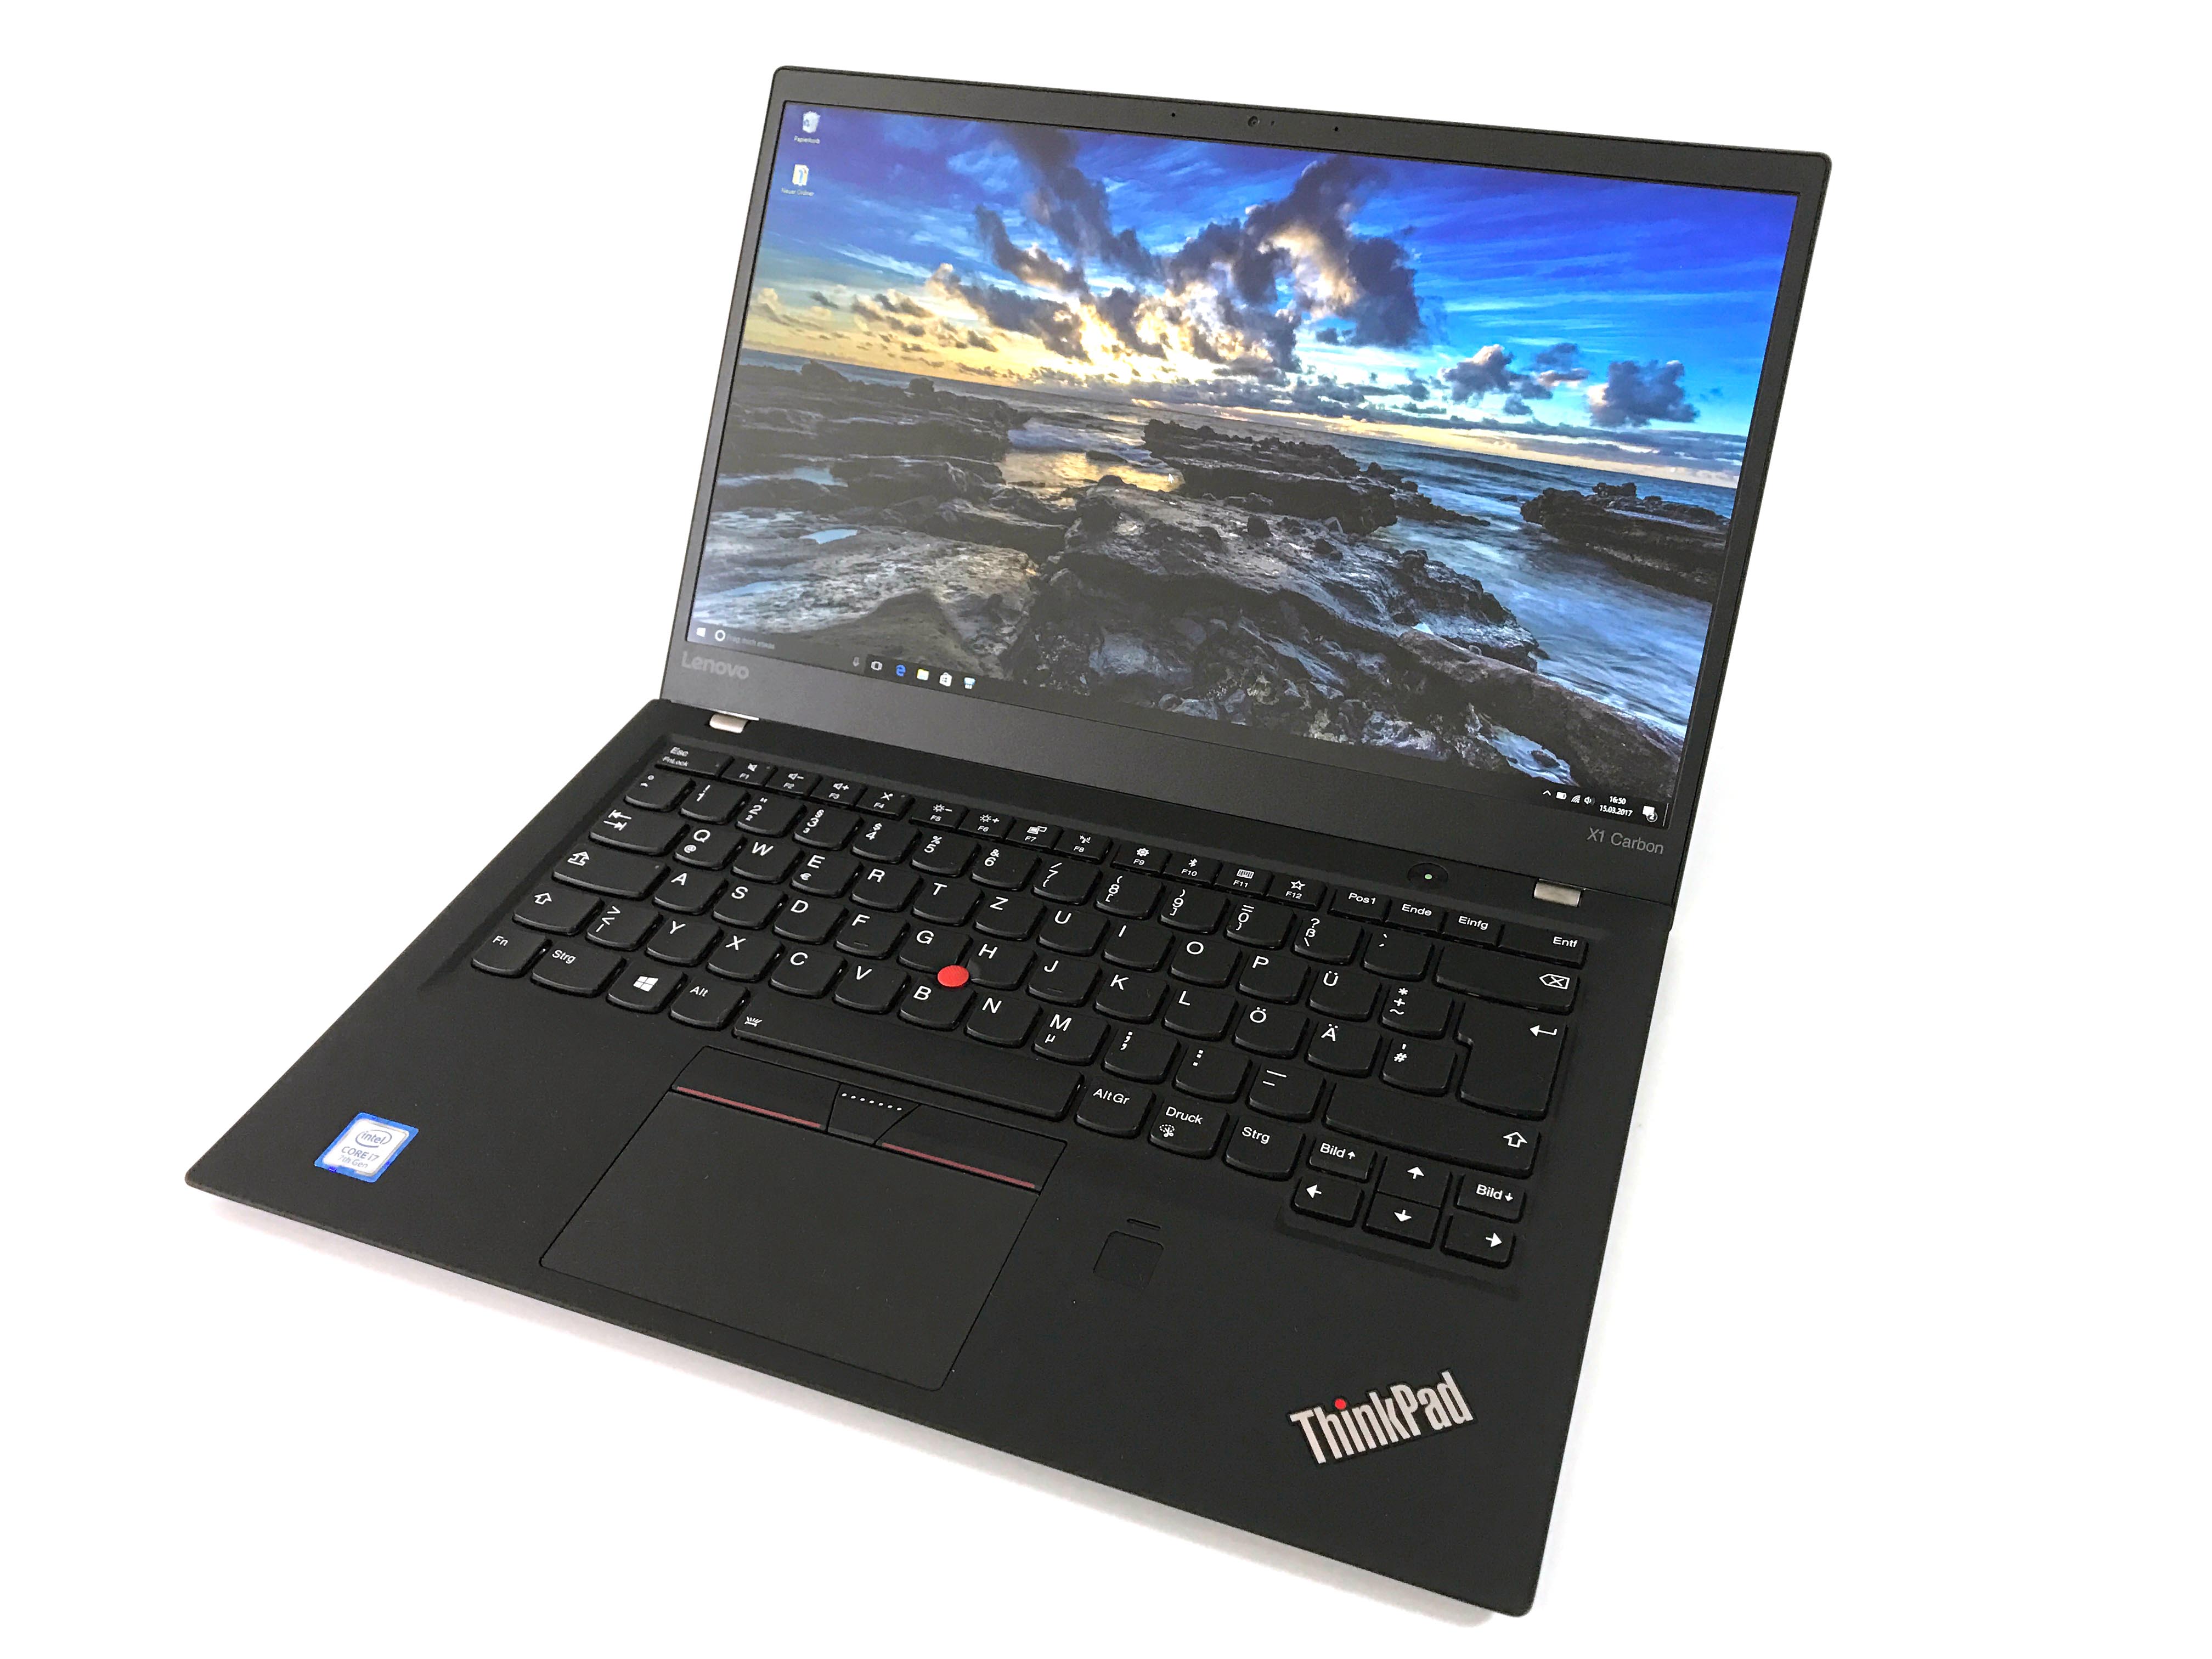 Lenovo ThinkPad X1 Carbon 2017 (Core i7, Full-HD) Laptop Review -   Reviews